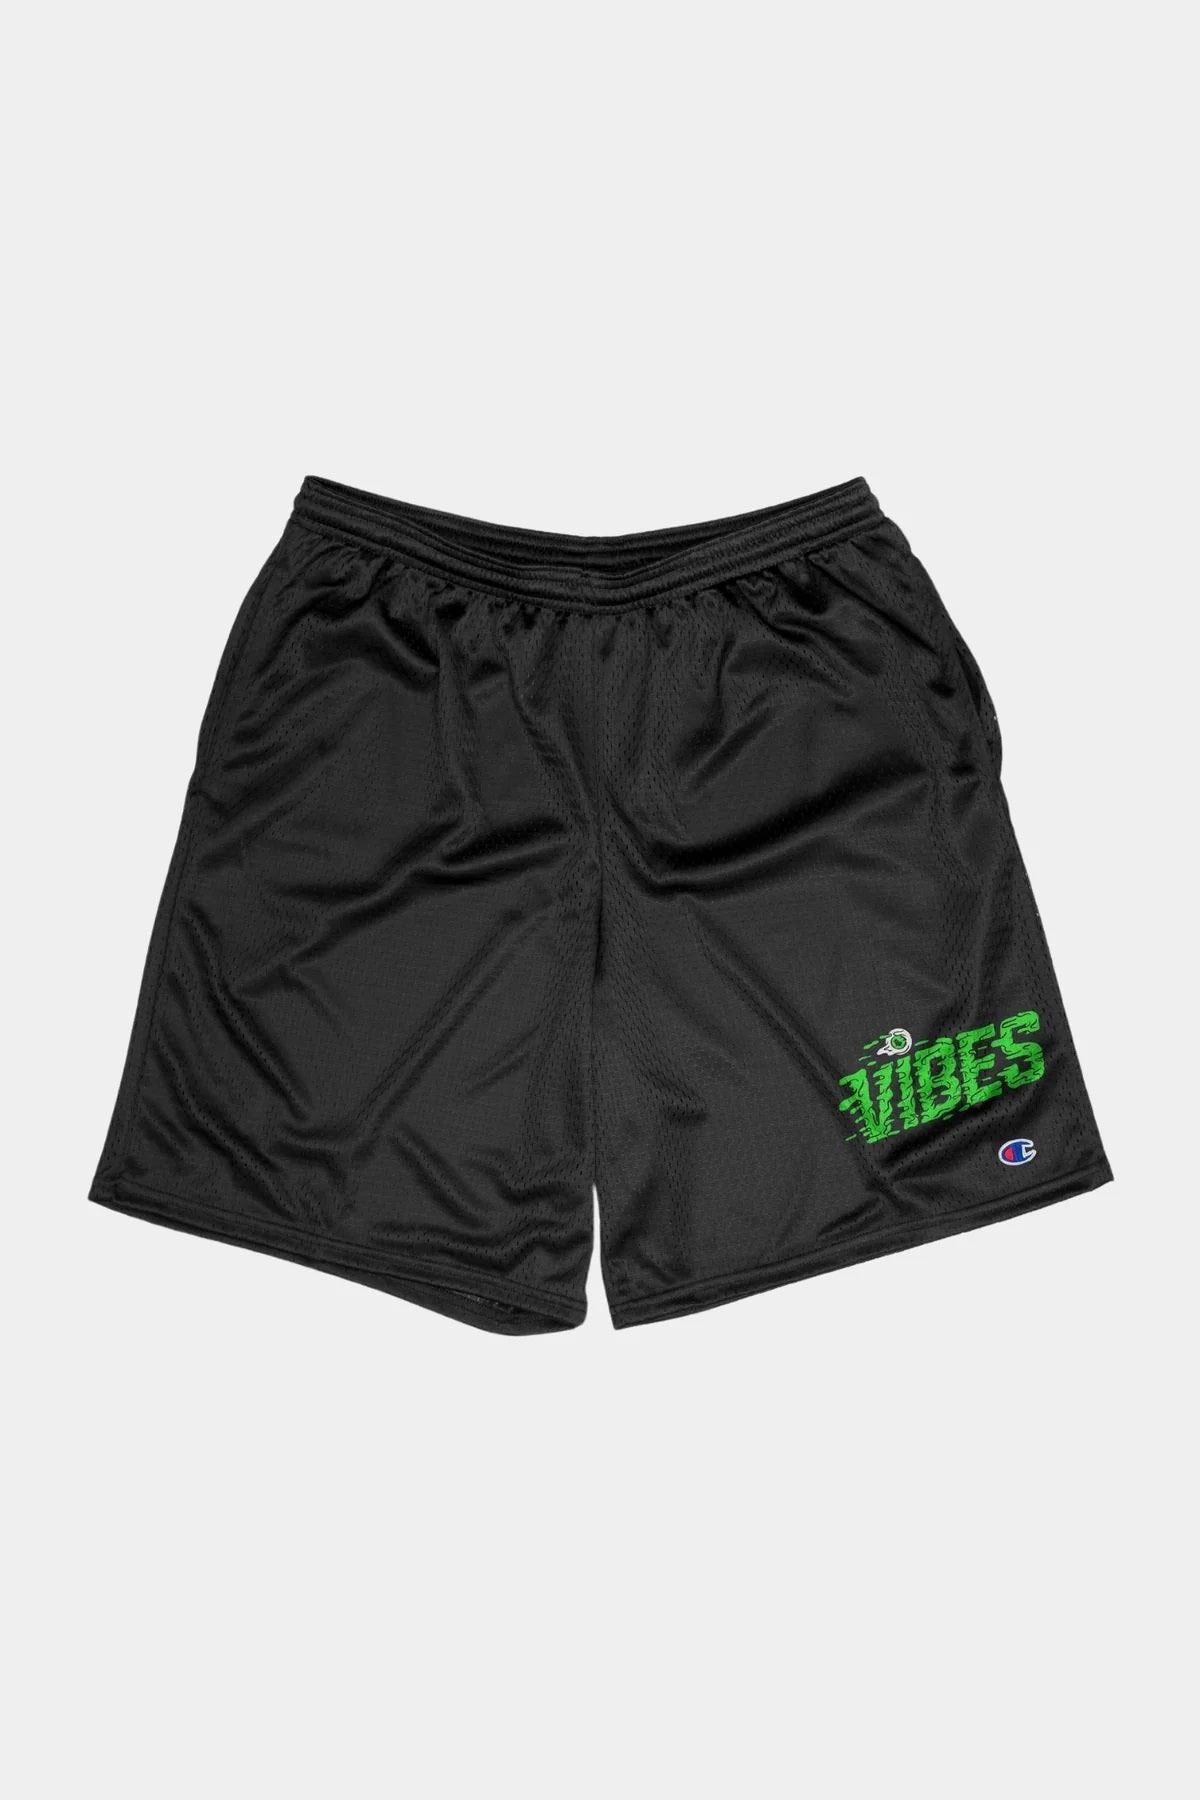 VIBES Black Slime Shorts Large